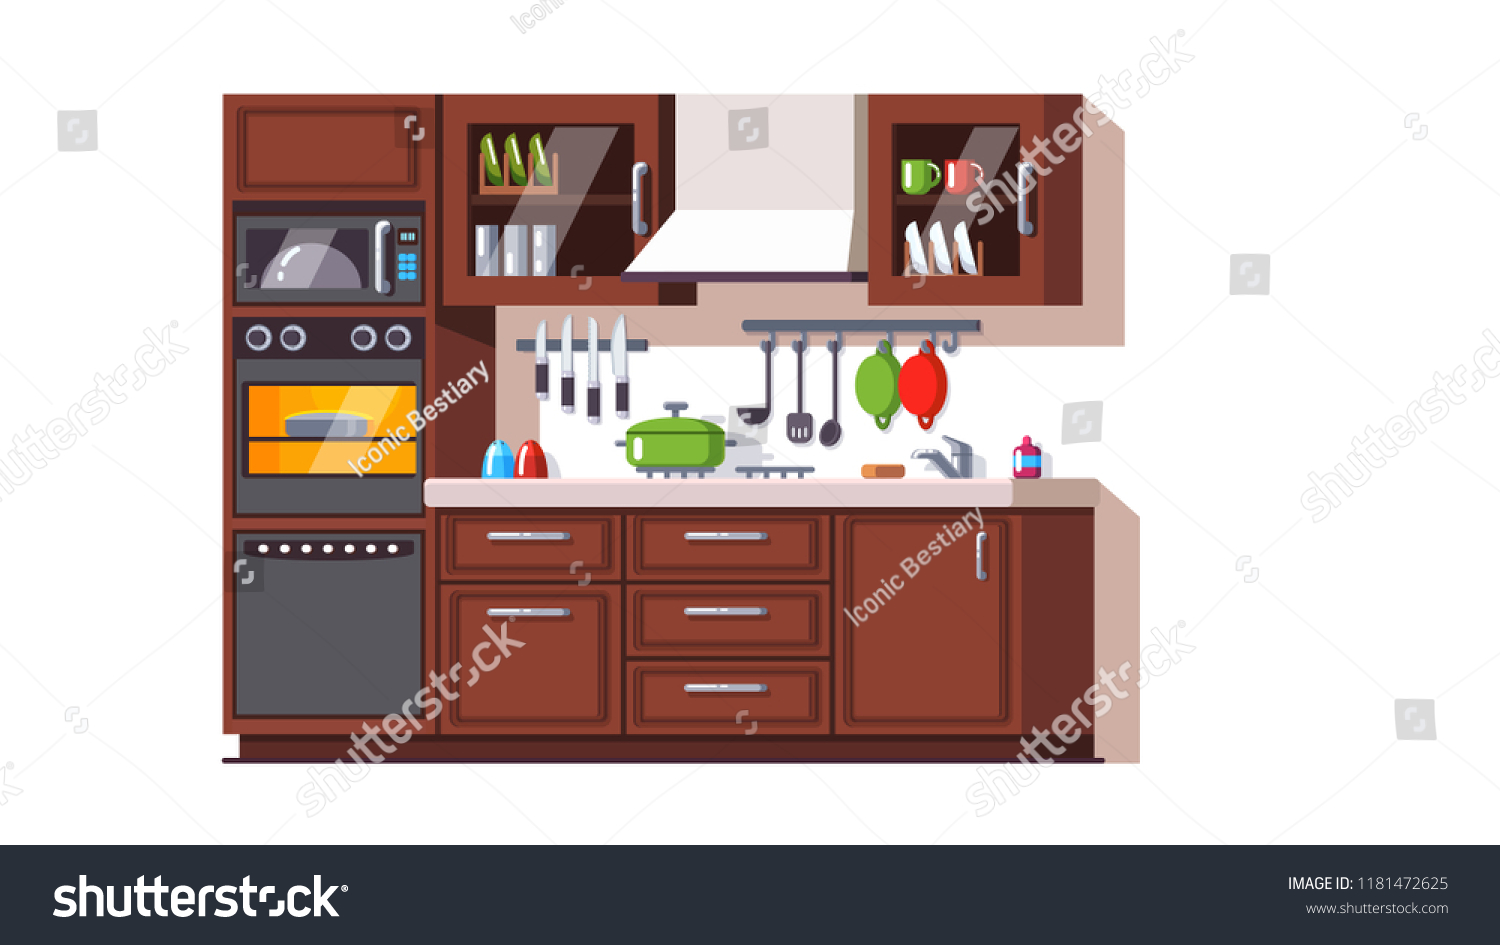 Kitchen Furniture Appliances Utensils Cabinets Oven Stock Vector